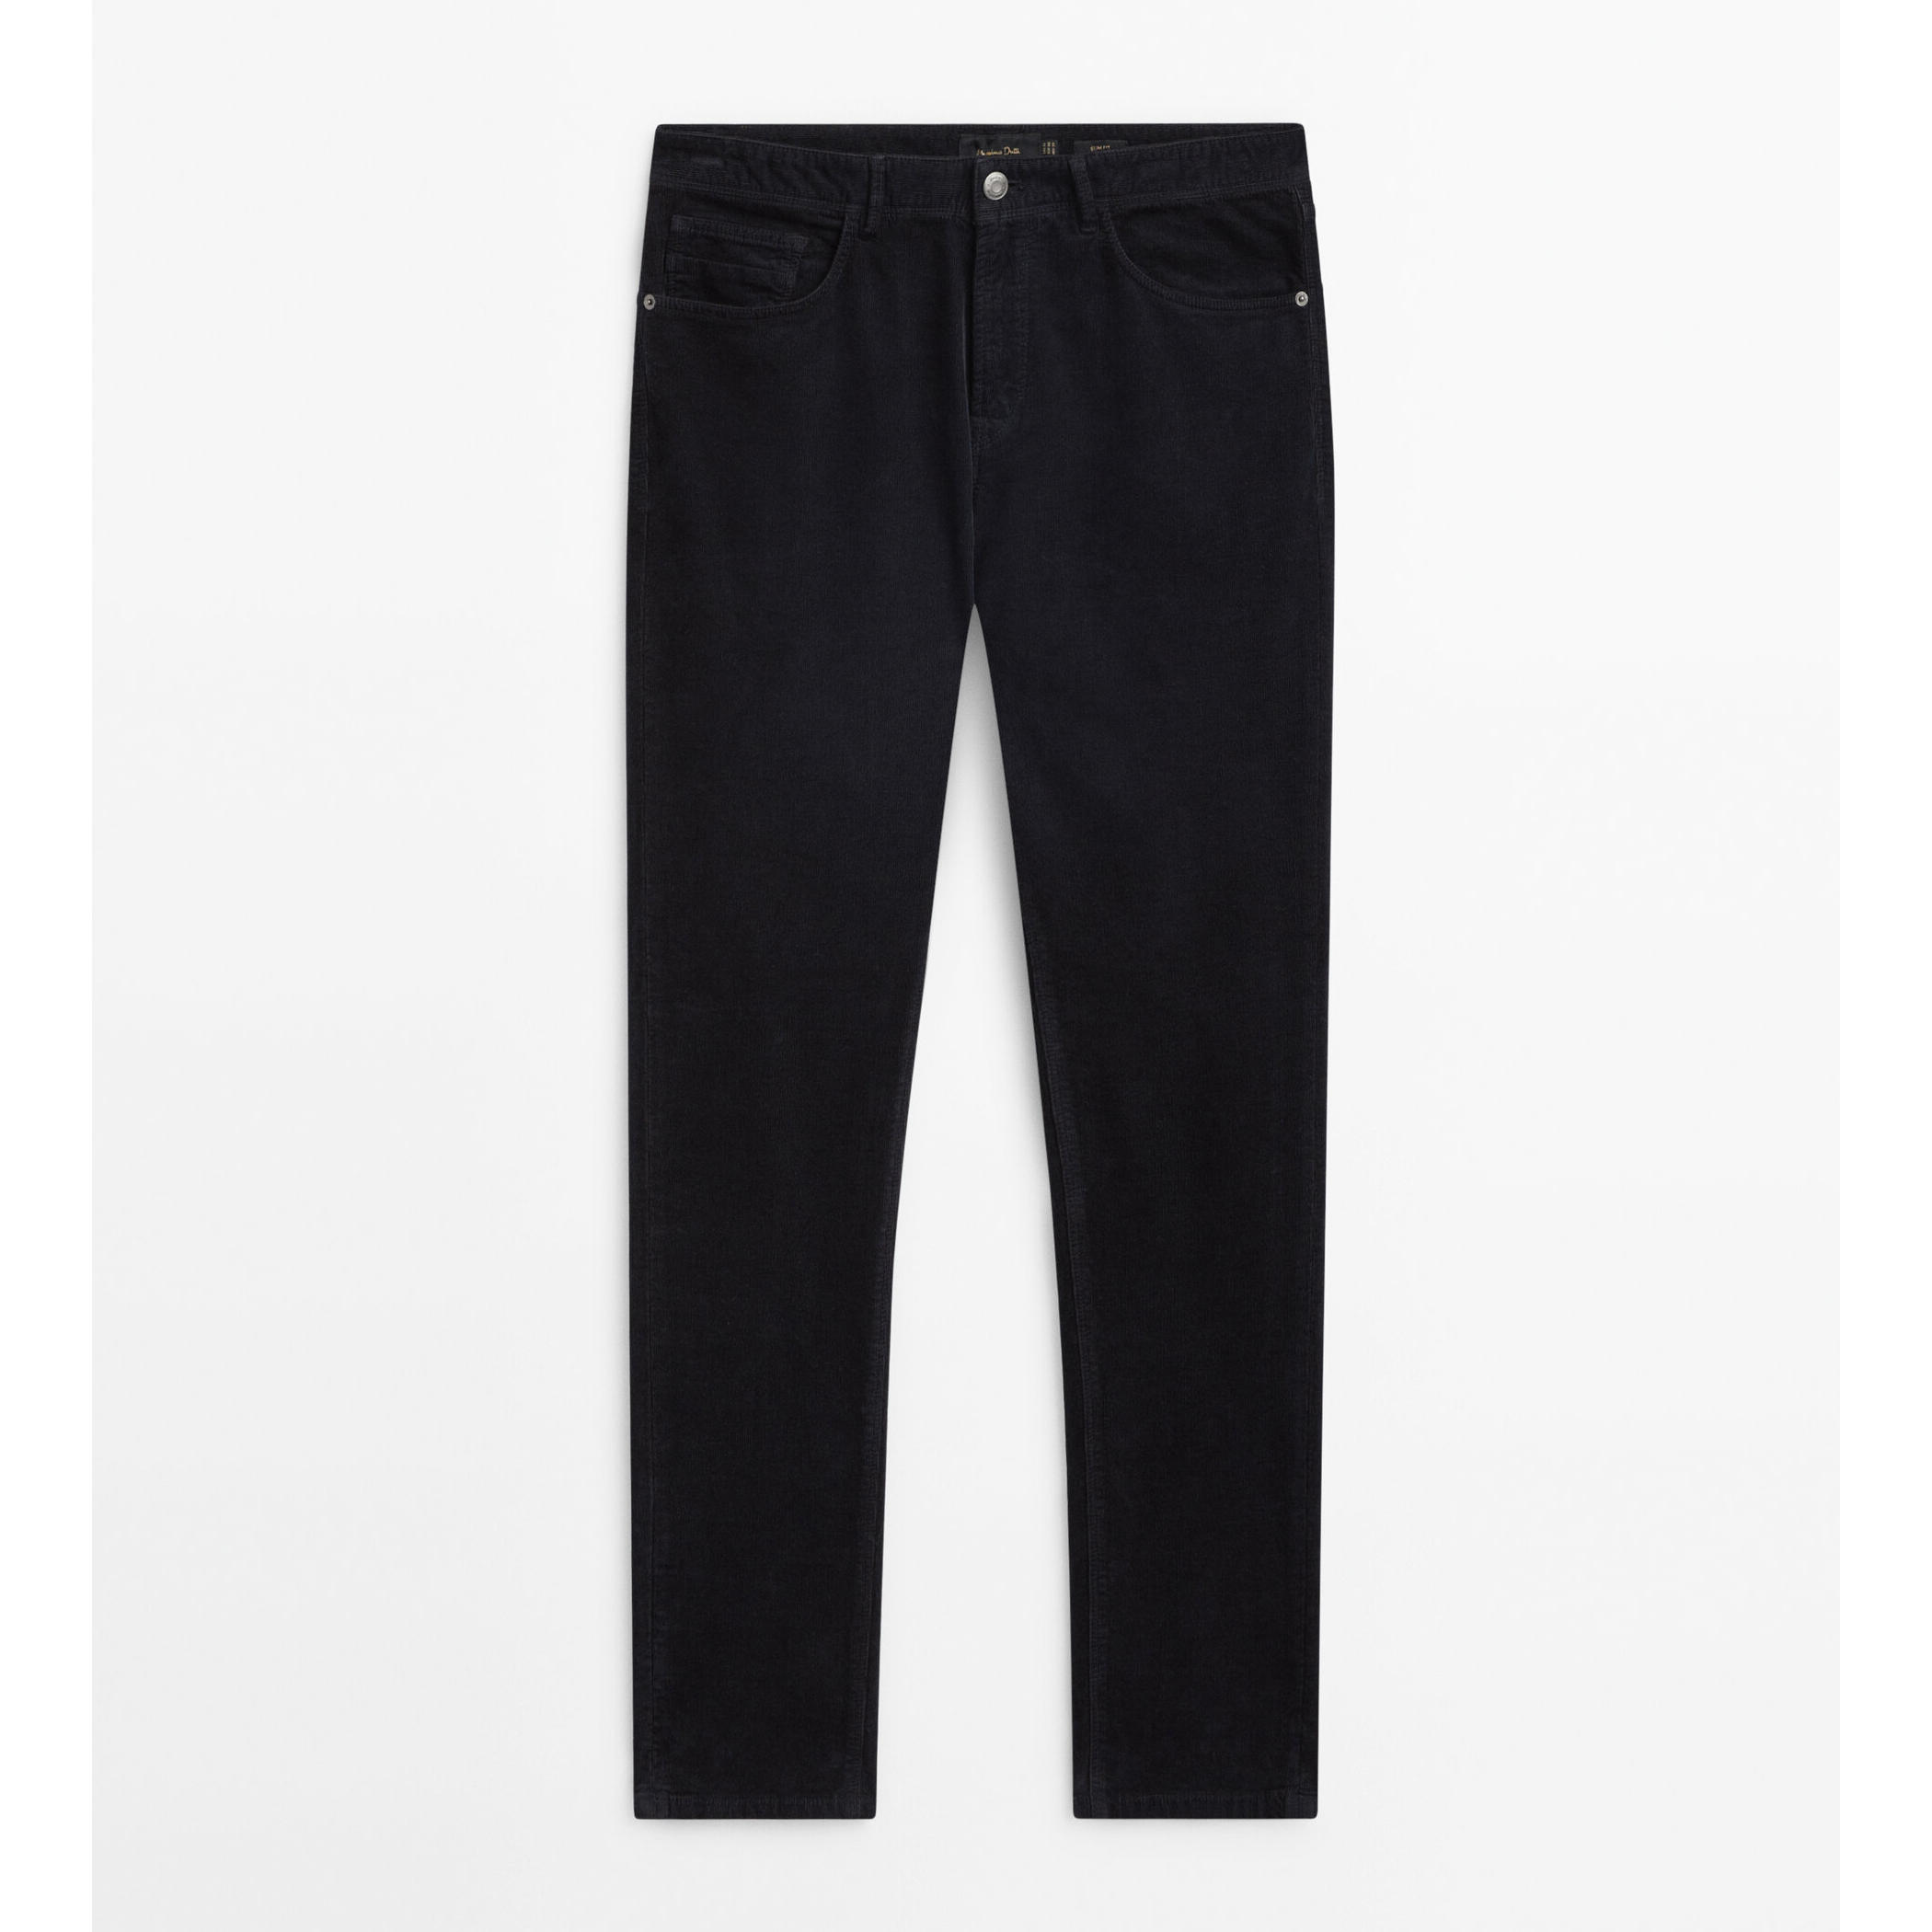 Джинсовые брюки Massimo Dutti Tapered-fit needlecord, темно-синий джинсовые брюки massimo dutti tapered fit needlecord хаки